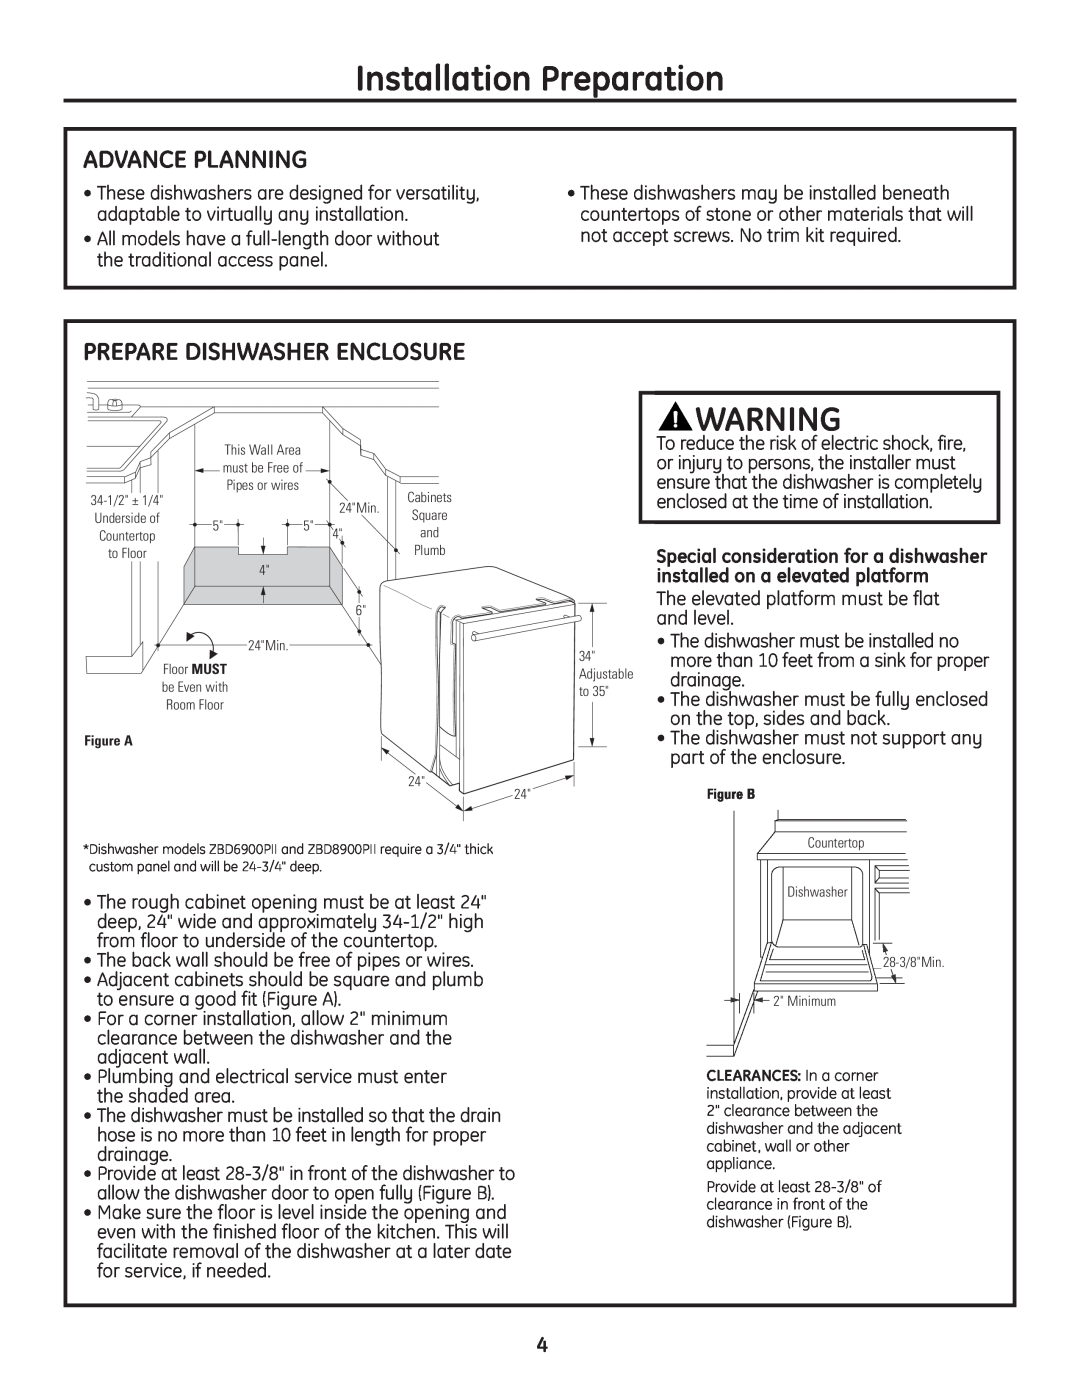 GE Monogram Built-In Dishwashers Advance Planning, Prepare Dishwasher Enclosure, Installation Preparation 